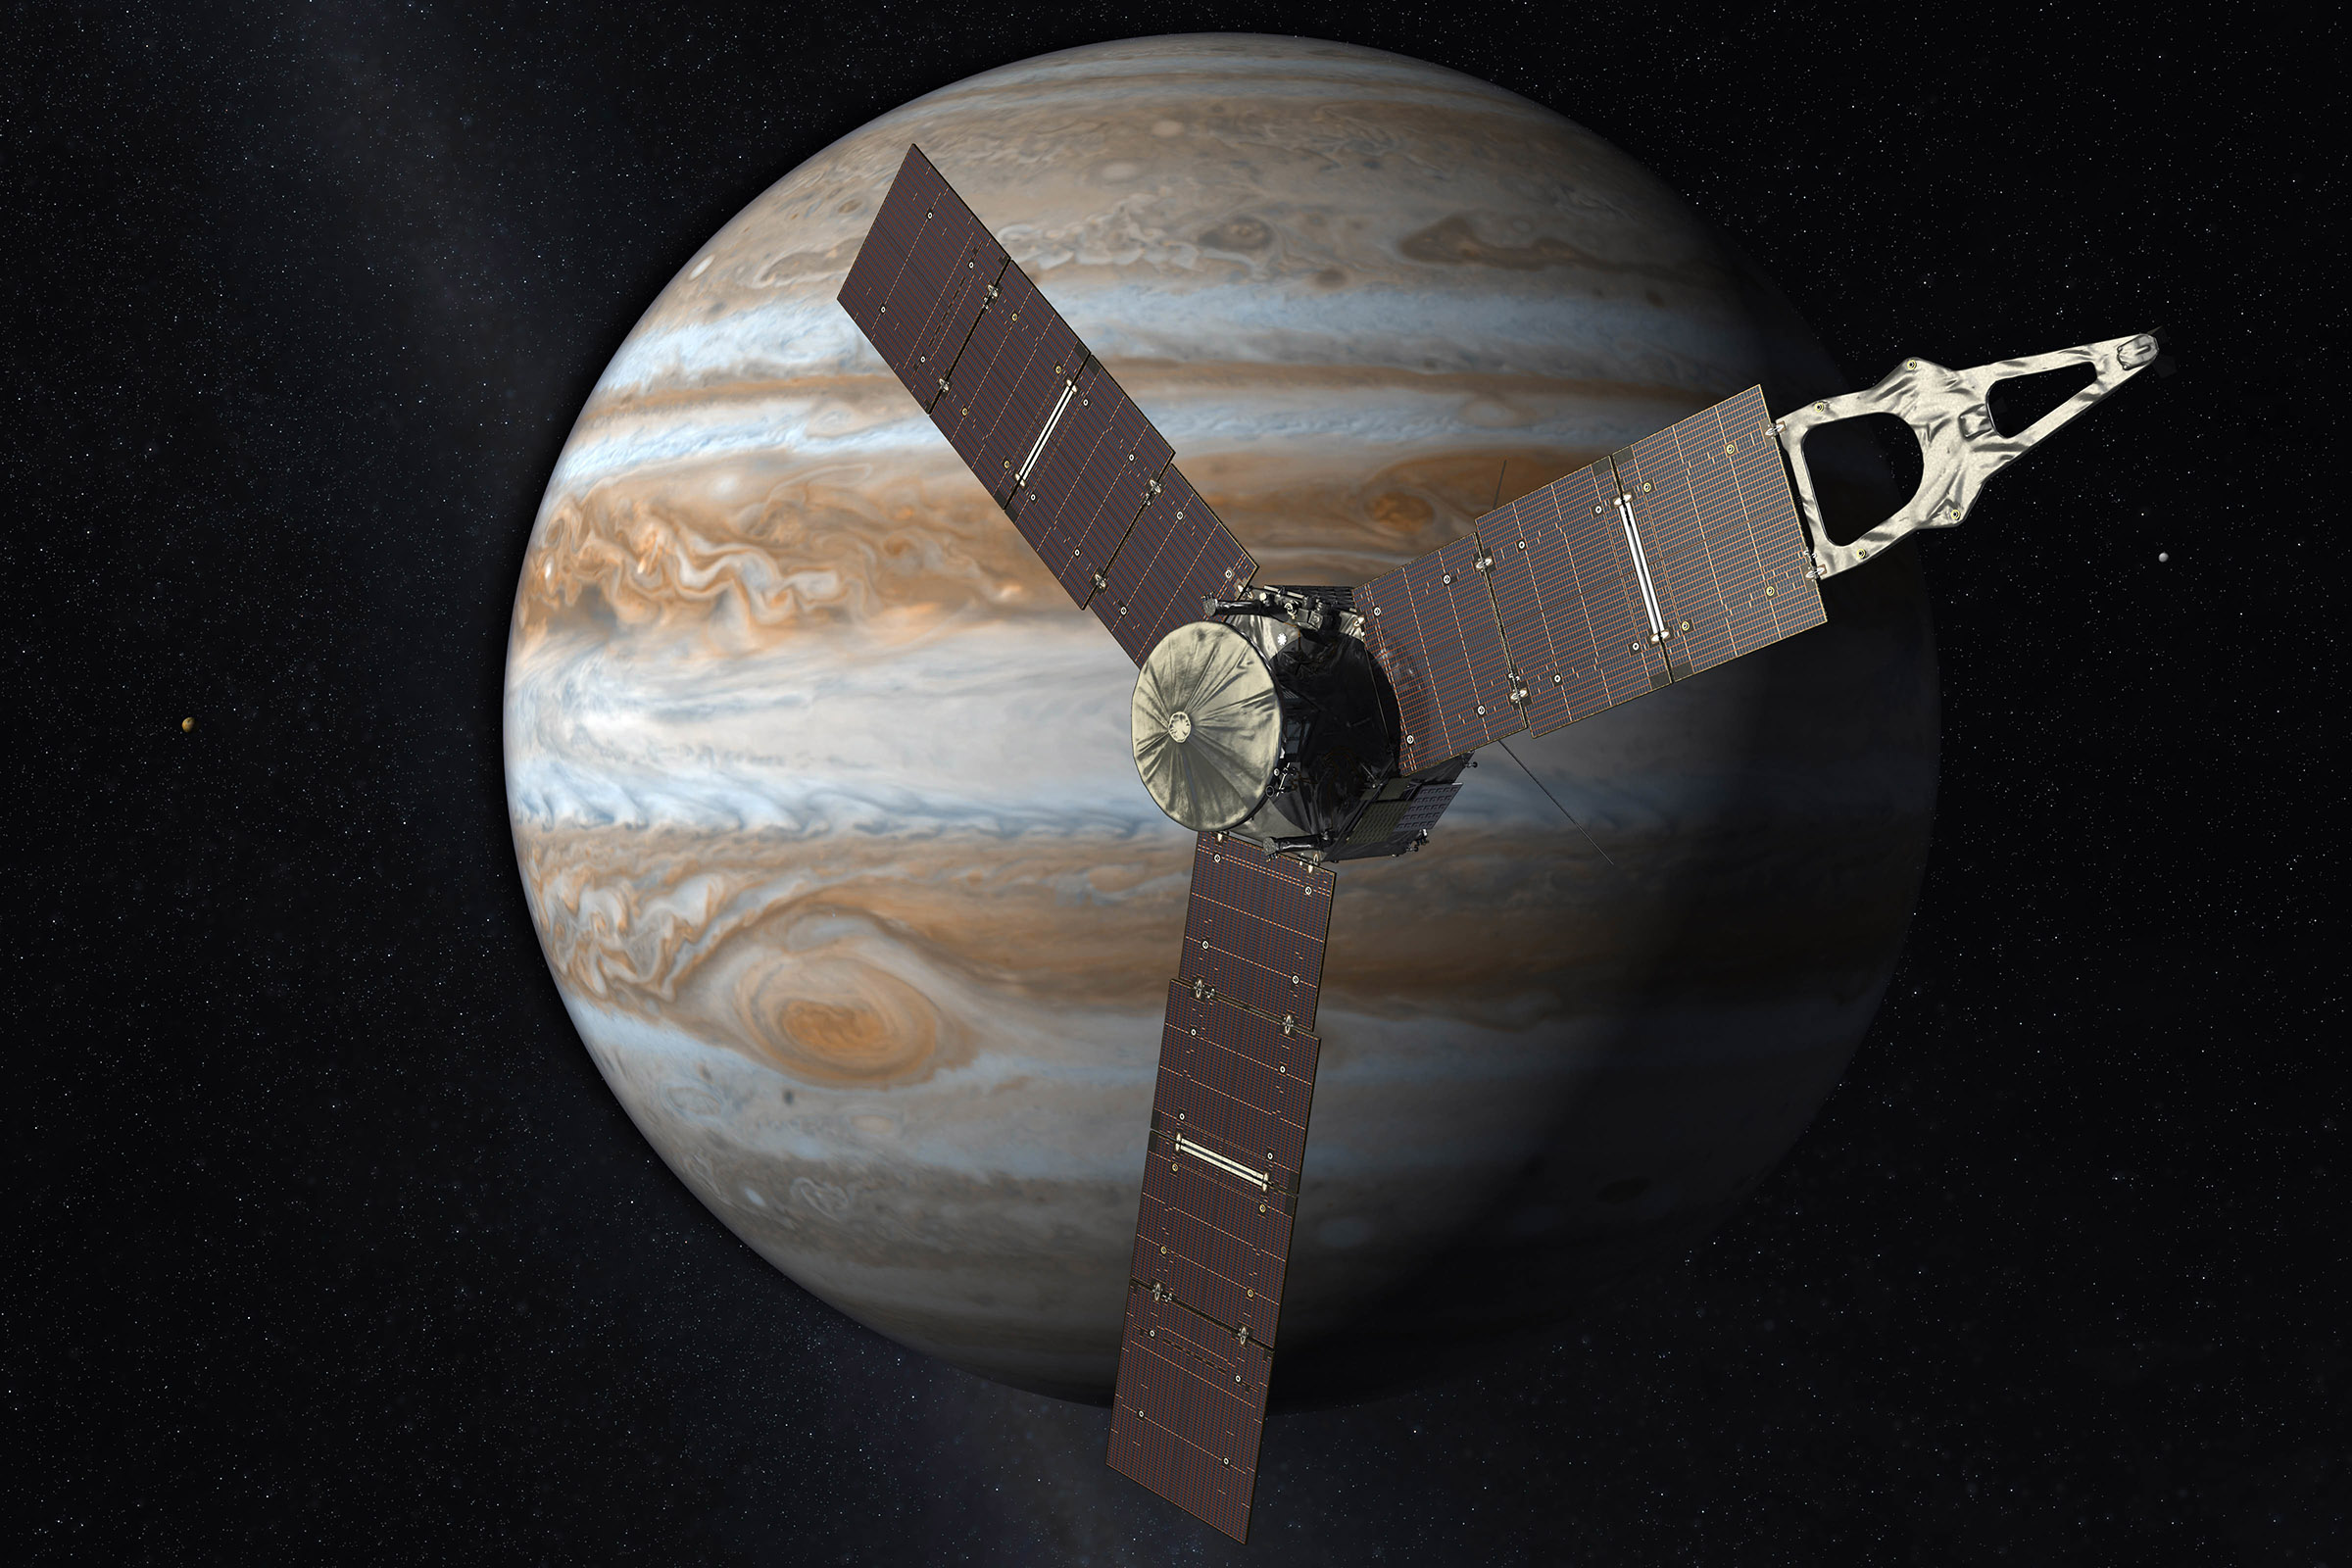 Juno’s cosmic date with Jupiter